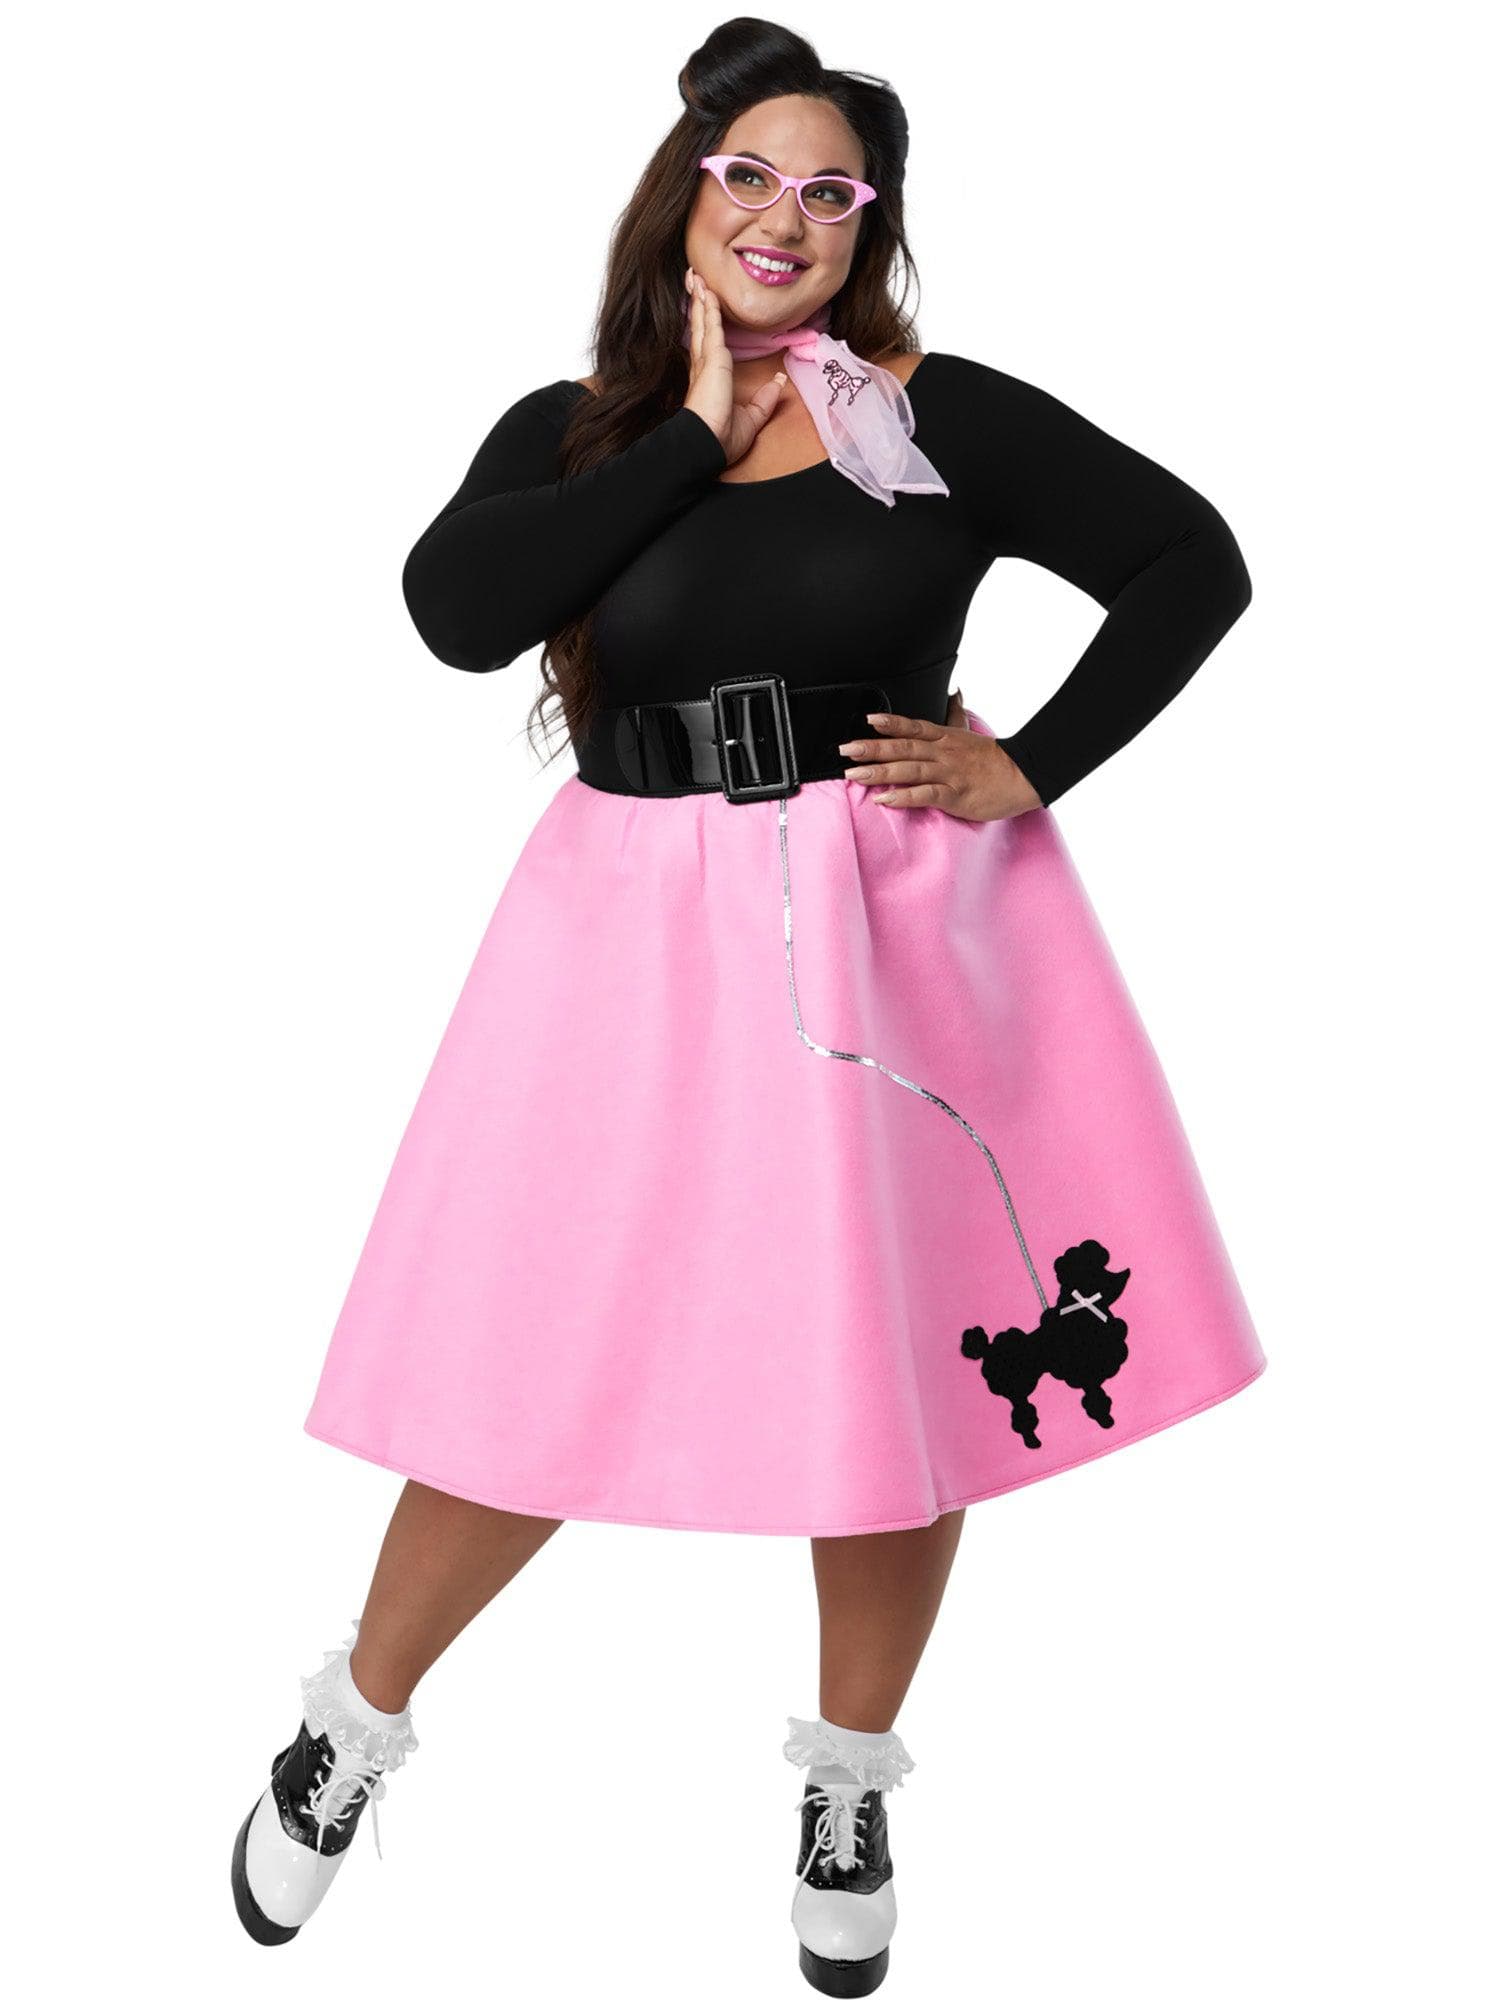 Adult Plus Pink Poodle Skirt Costume - costumes.com